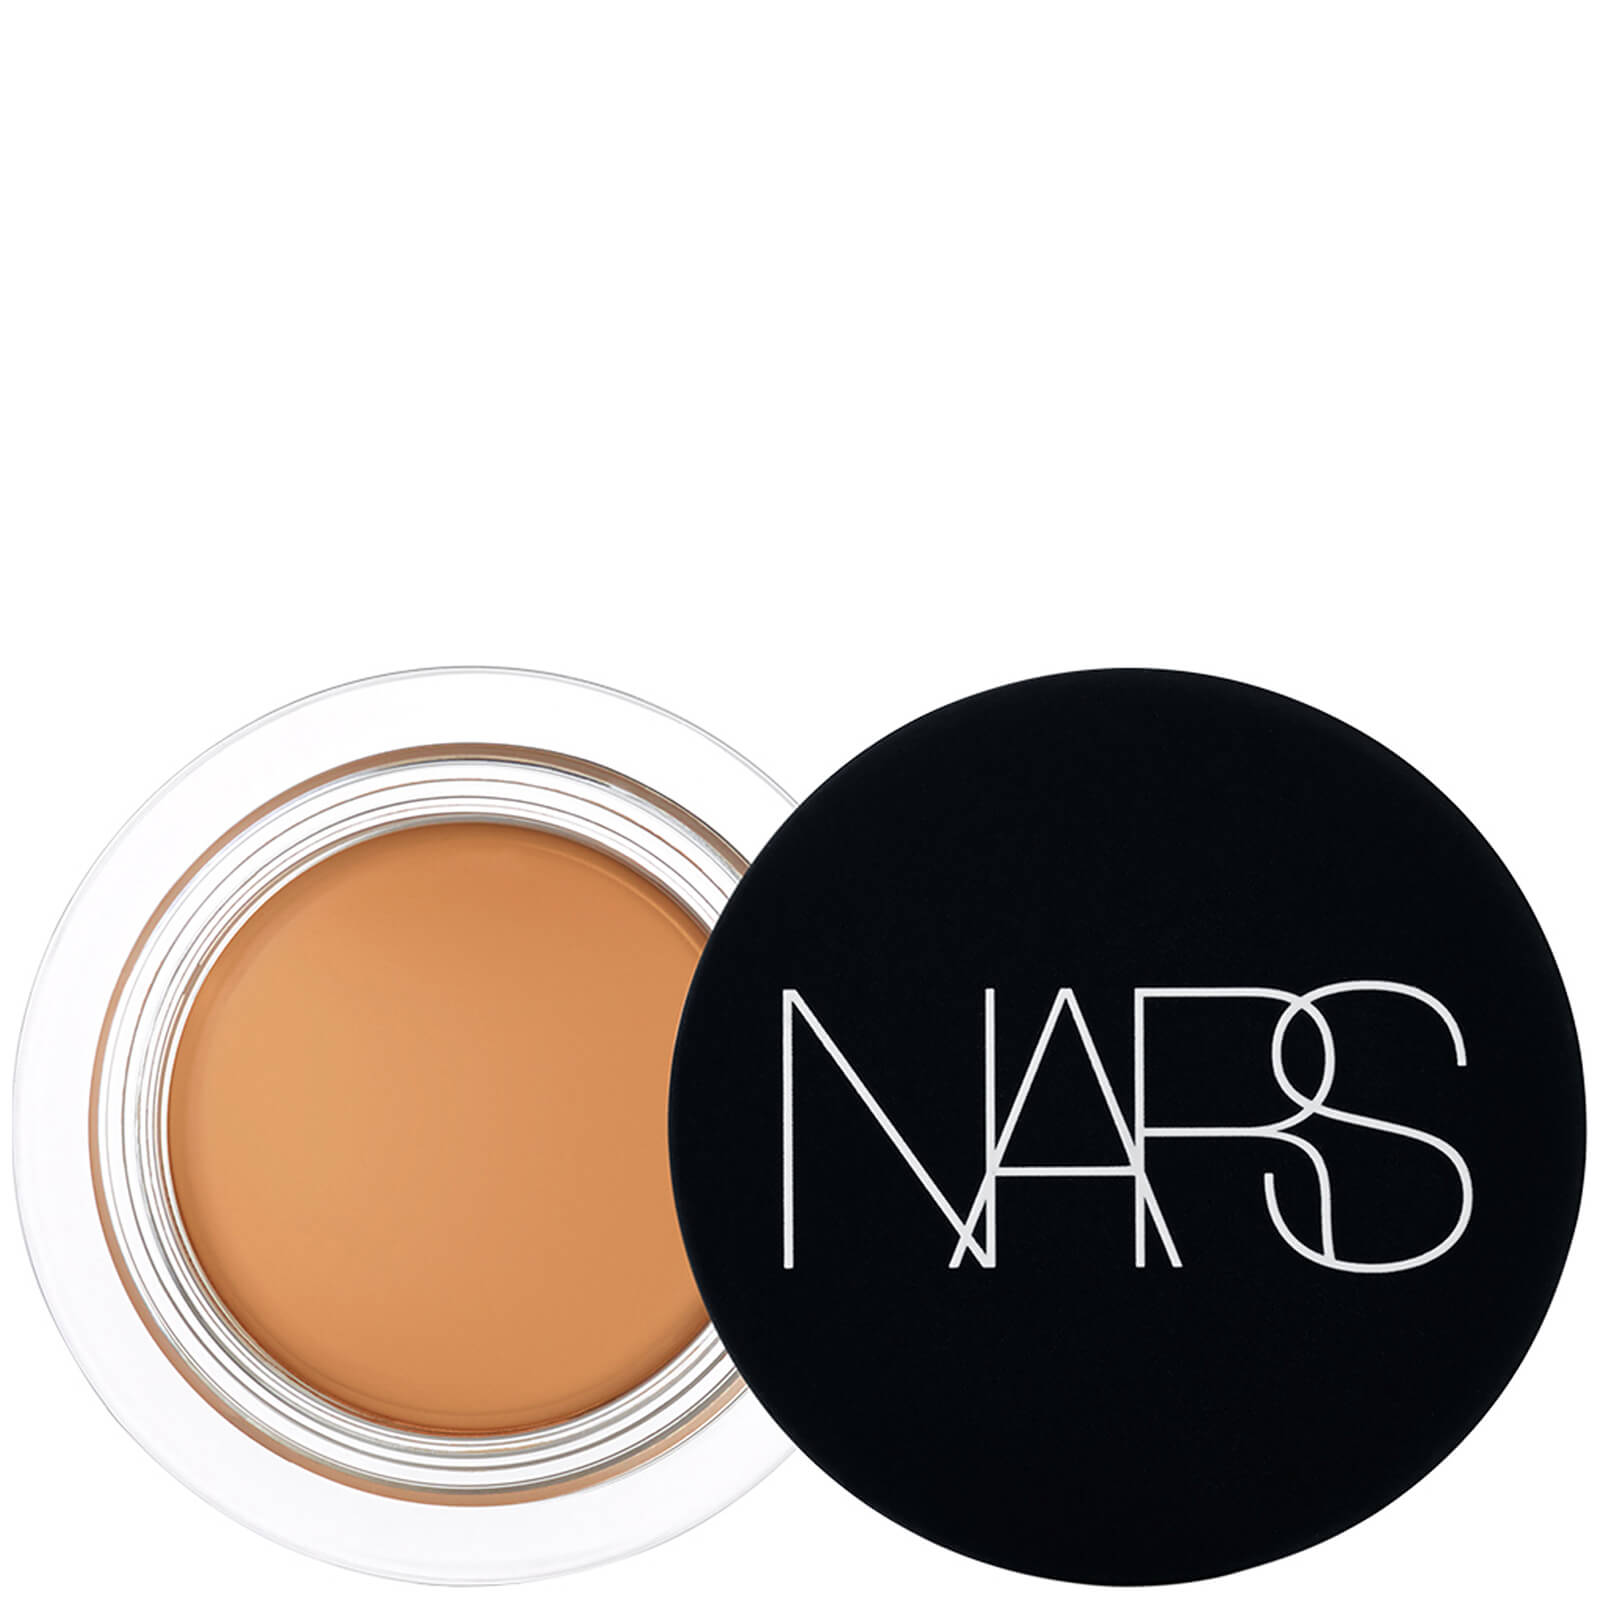 NARS Cosmetics Soft Matte Complete Concealer 5g (Various Shades) - Caramel